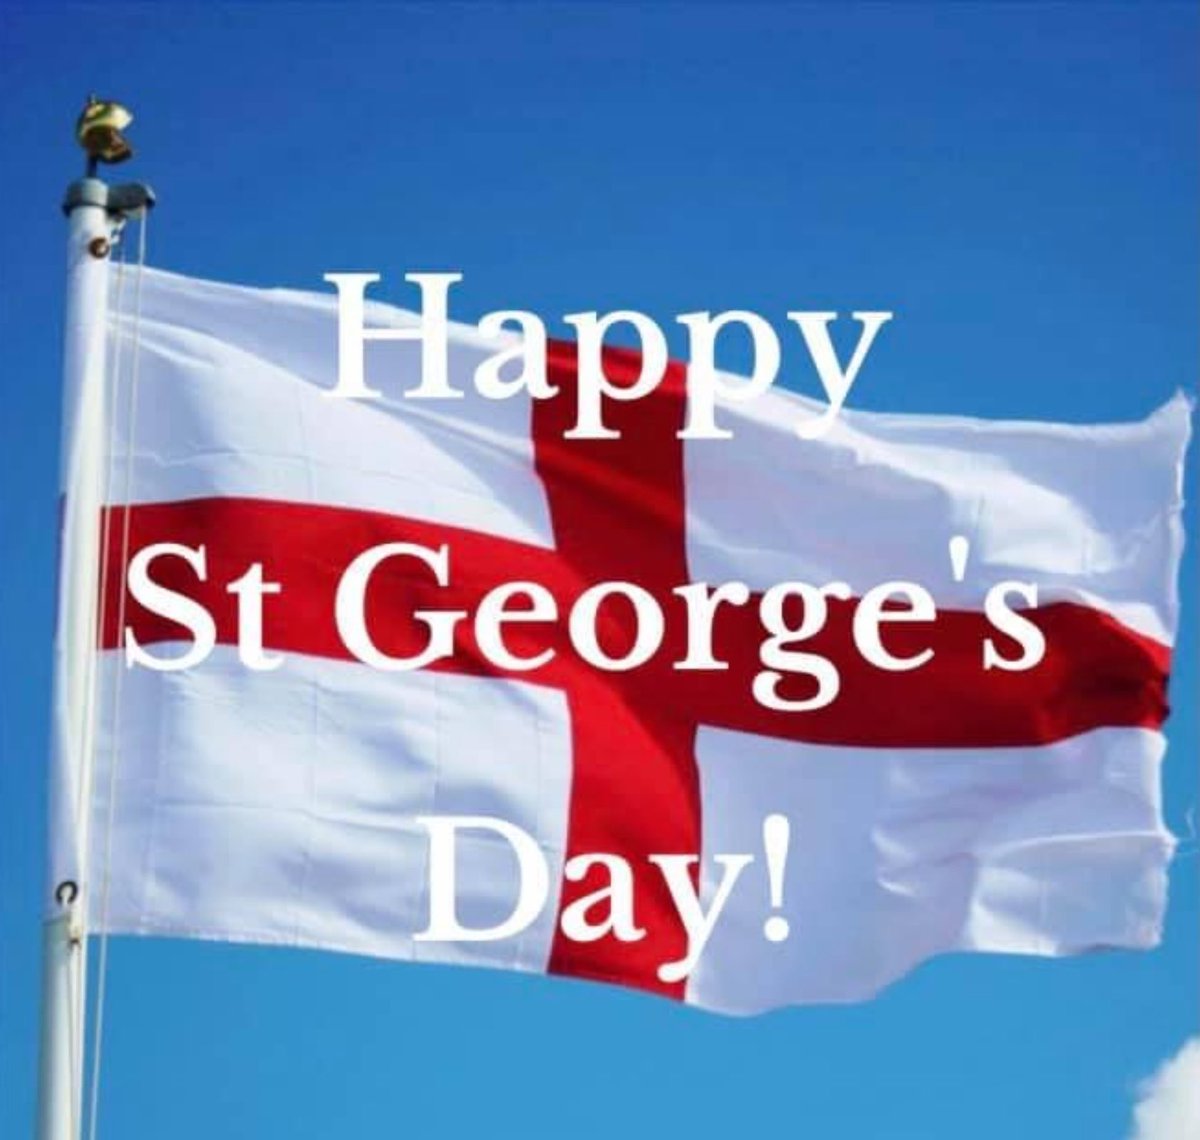 Happy St George’s Day 🏴󠁧󠁢󠁥󠁮󠁧󠁿🏴󠁧󠁢󠁥󠁮󠁧󠁿🏴󠁧󠁢󠁥󠁮󠁧󠁿🏴󠁧󠁢󠁥󠁮󠁧󠁿🏴󠁧󠁢󠁥󠁮󠁧󠁿🏴󠁧󠁢󠁥󠁮󠁧󠁿🏴󠁧󠁢󠁥󠁮󠁧󠁿🏴󠁧󠁢󠁥󠁮󠁧󠁿🏴󠁧󠁢󠁥󠁮󠁧󠁿🏴󠁧󠁢󠁥󠁮󠁧󠁿🏴󠁧󠁢󠁥󠁮󠁧󠁿🏴󠁧󠁢󠁥󠁮󠁧󠁿🏴󠁧󠁢󠁥󠁮󠁧󠁿🏴󠁧󠁢󠁥󠁮󠁧󠁿🏴󠁧󠁢󠁥󠁮󠁧󠁿🏴󠁧󠁢󠁥󠁮󠁧󠁿🏴󠁧󠁢󠁥󠁮󠁧󠁿🏴󠁧󠁢󠁥󠁮󠁧󠁿🏴󠁧󠁢󠁥󠁮󠁧󠁿🏴󠁧󠁢󠁥󠁮󠁧󠁿🏴󠁧󠁢󠁥󠁮󠁧󠁿🏴󠁧󠁢󠁥󠁮󠁧󠁿🏴󠁧󠁢󠁥󠁮󠁧󠁿🏴󠁧󠁢󠁥󠁮󠁧󠁿🏴󠁧󠁢󠁥󠁮󠁧󠁿🏴󠁧󠁢󠁥󠁮󠁧󠁿🏴󠁧󠁢󠁥󠁮󠁧󠁿🏴󠁧󠁢󠁥󠁮󠁧󠁿🏴󠁧󠁢󠁥󠁮󠁧󠁿🏴󠁧󠁢󠁥󠁮󠁧󠁿🏴󠁧󠁢󠁥󠁮󠁧󠁿